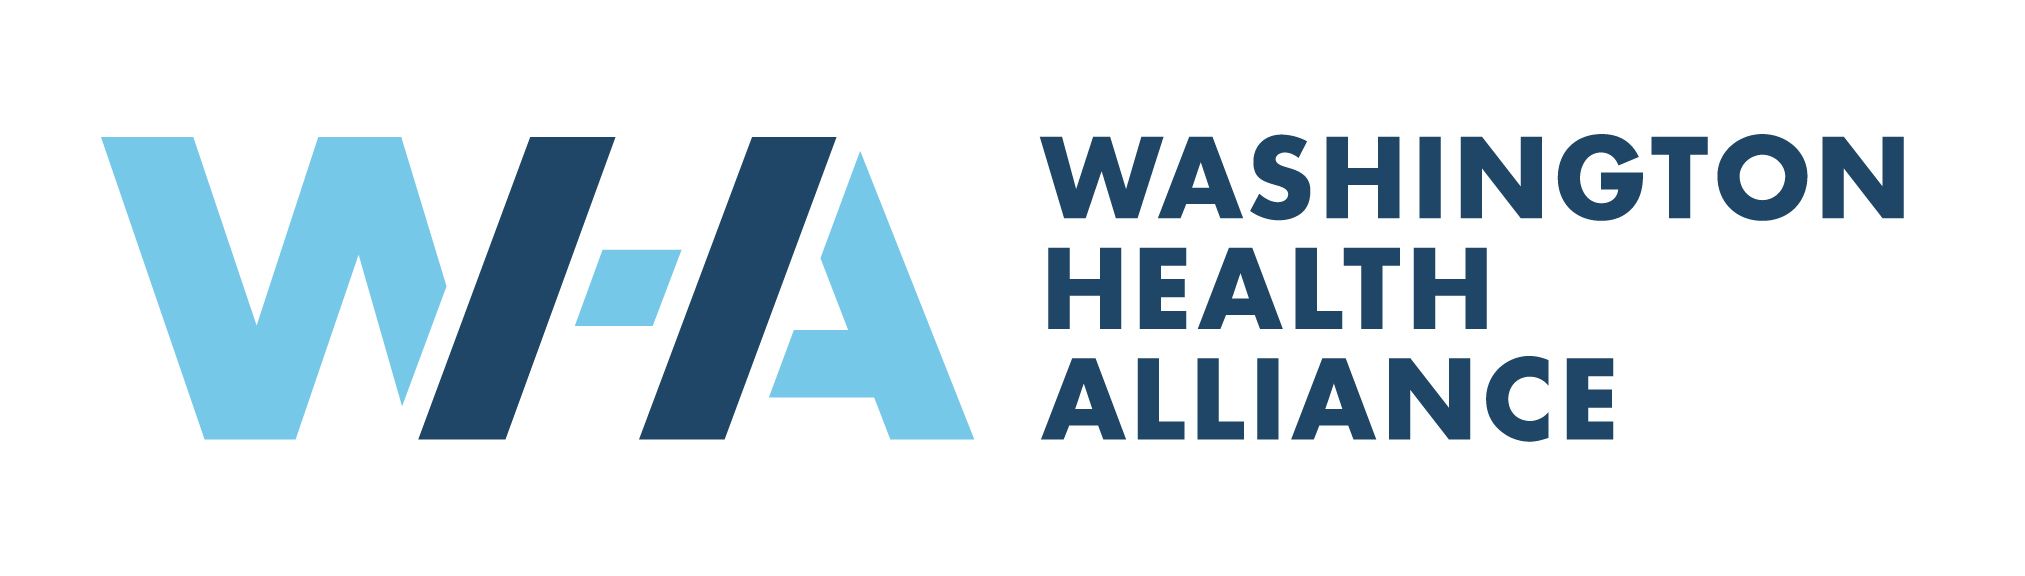 The Washington Health Alliance